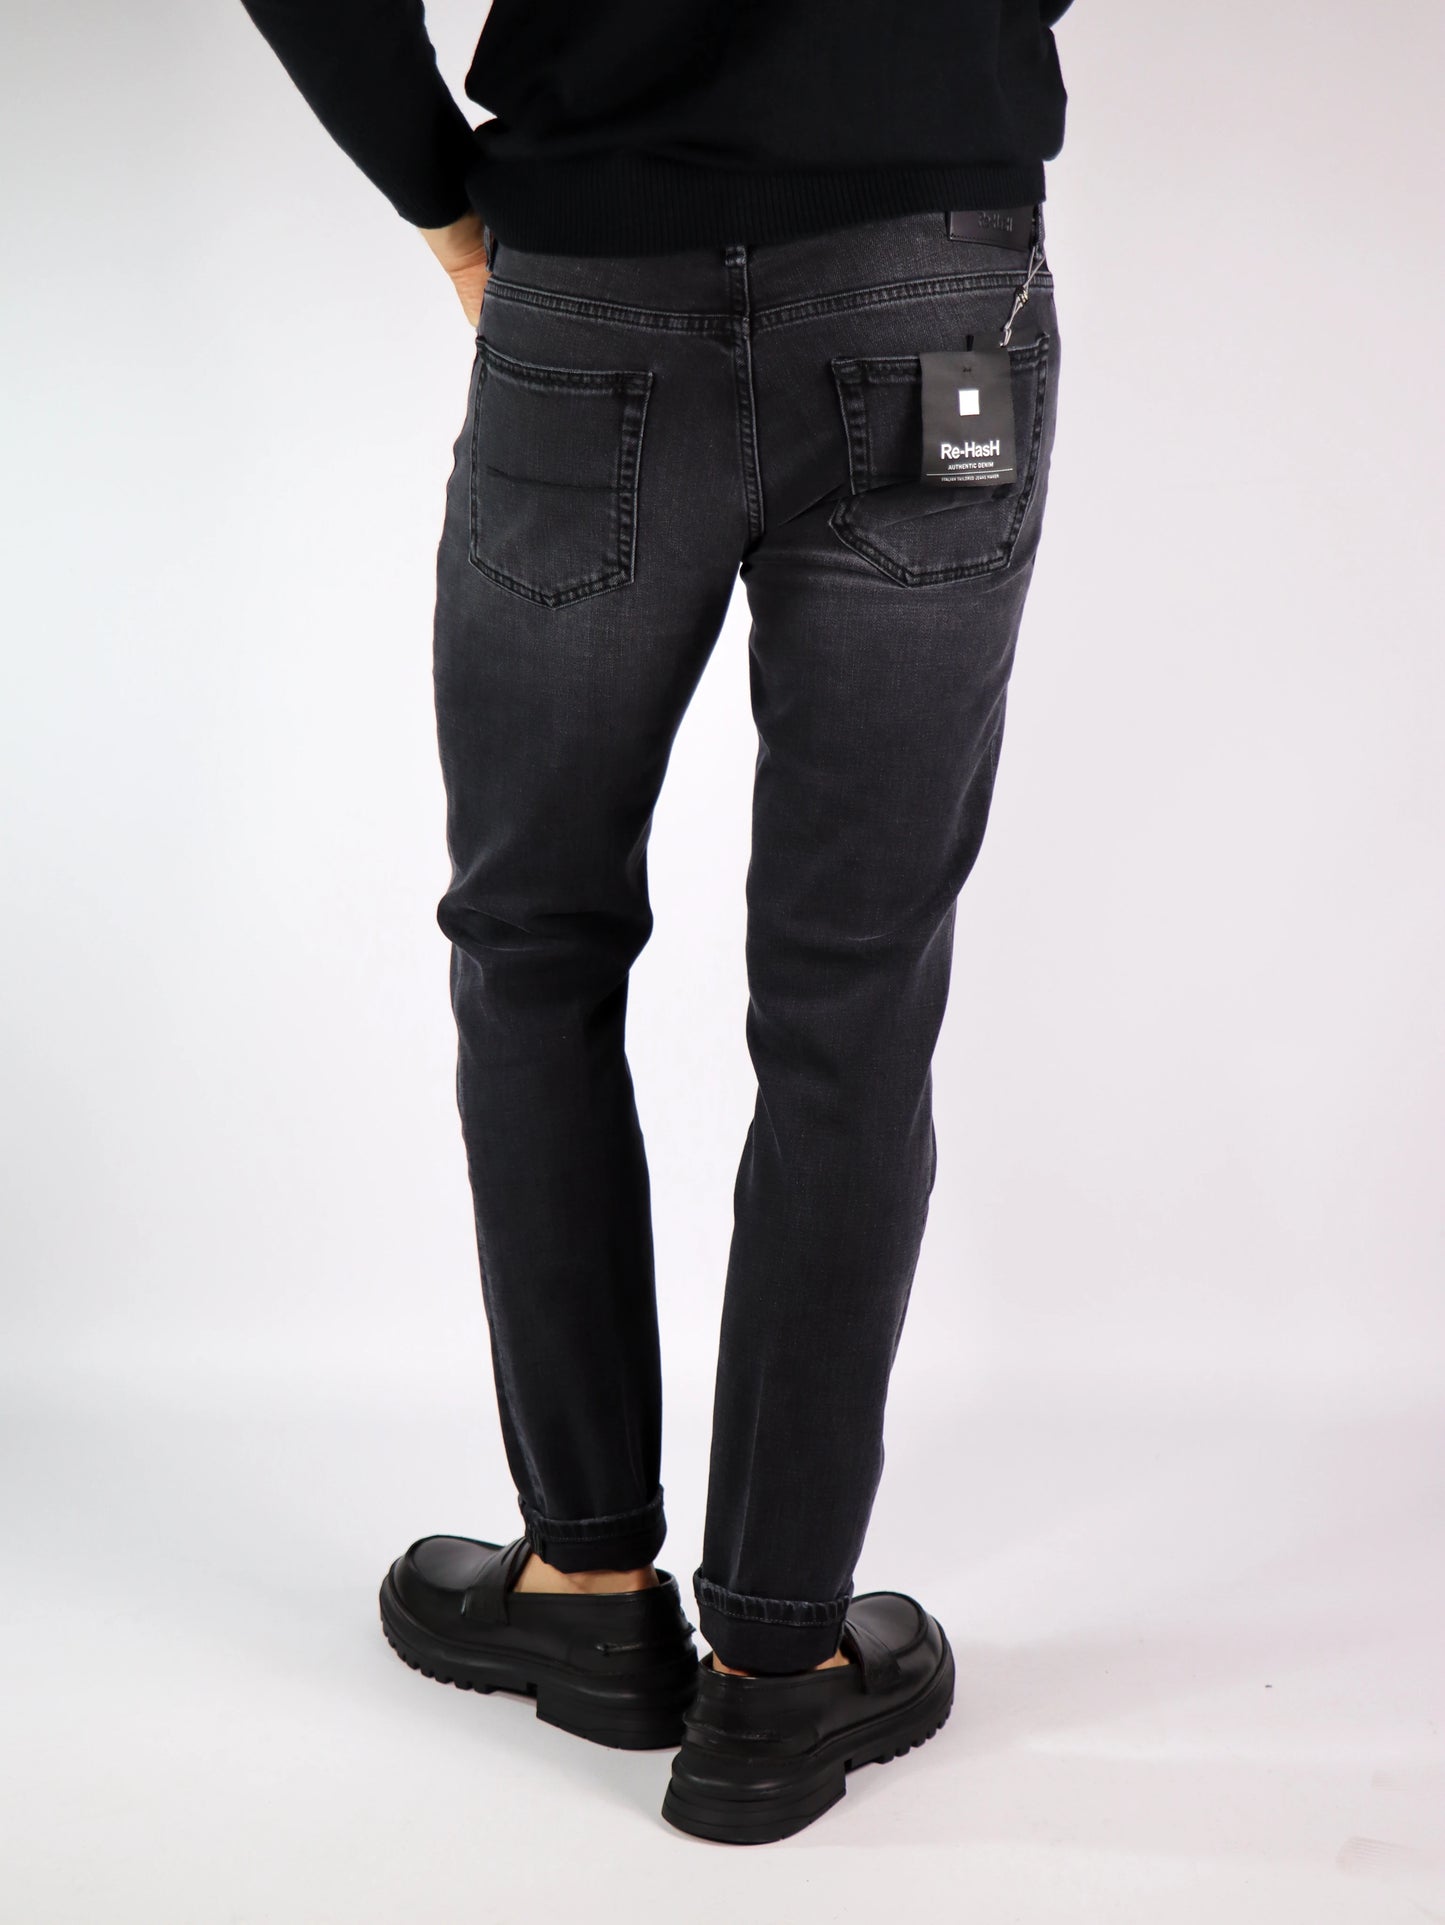 Jeans black rubens RE HASH 2D517